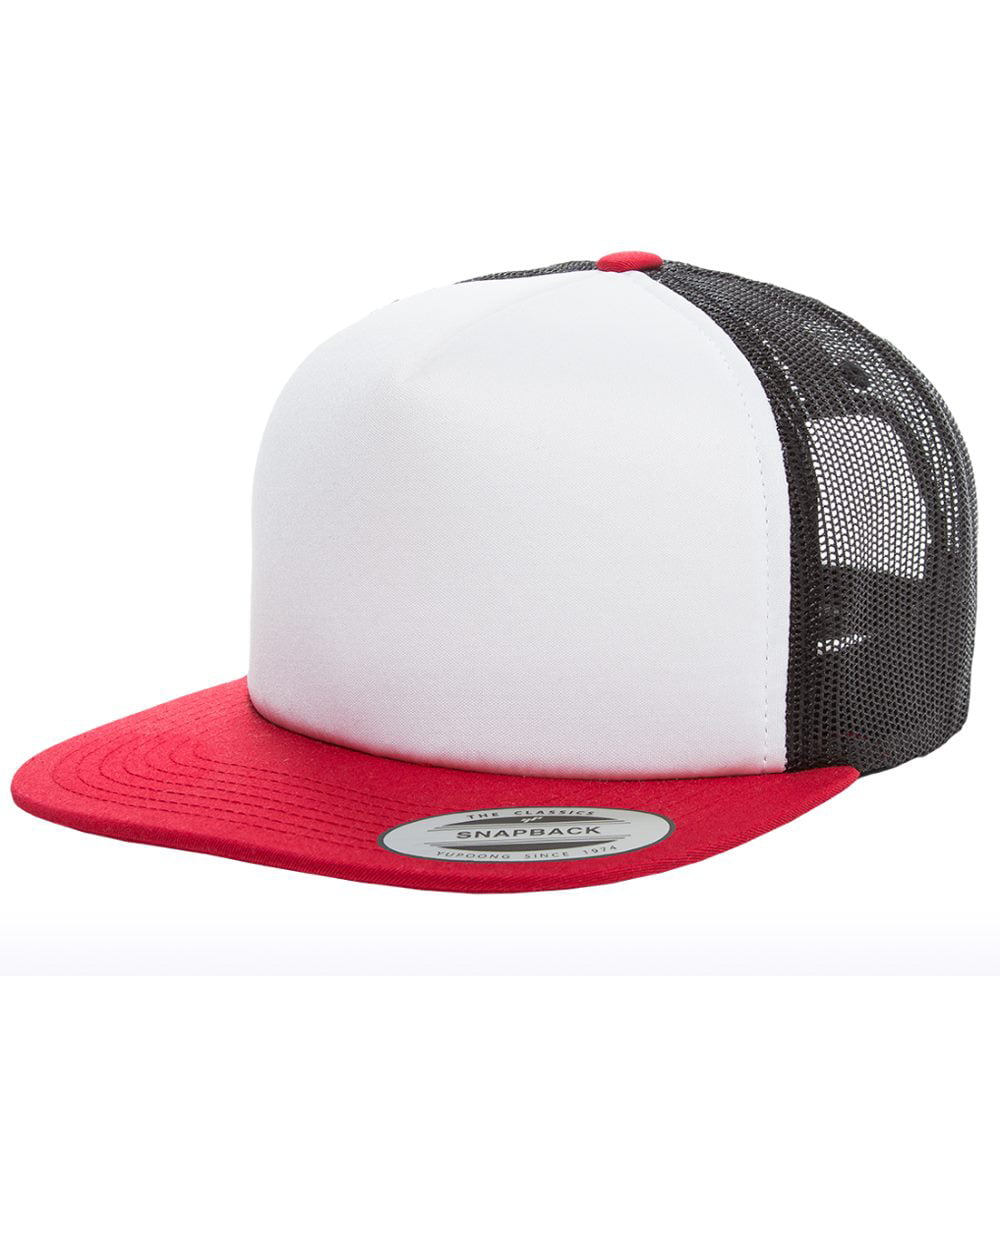 Pawr Classic Flat-Brimmed Trucker Hat Baseball Cap Dark Red